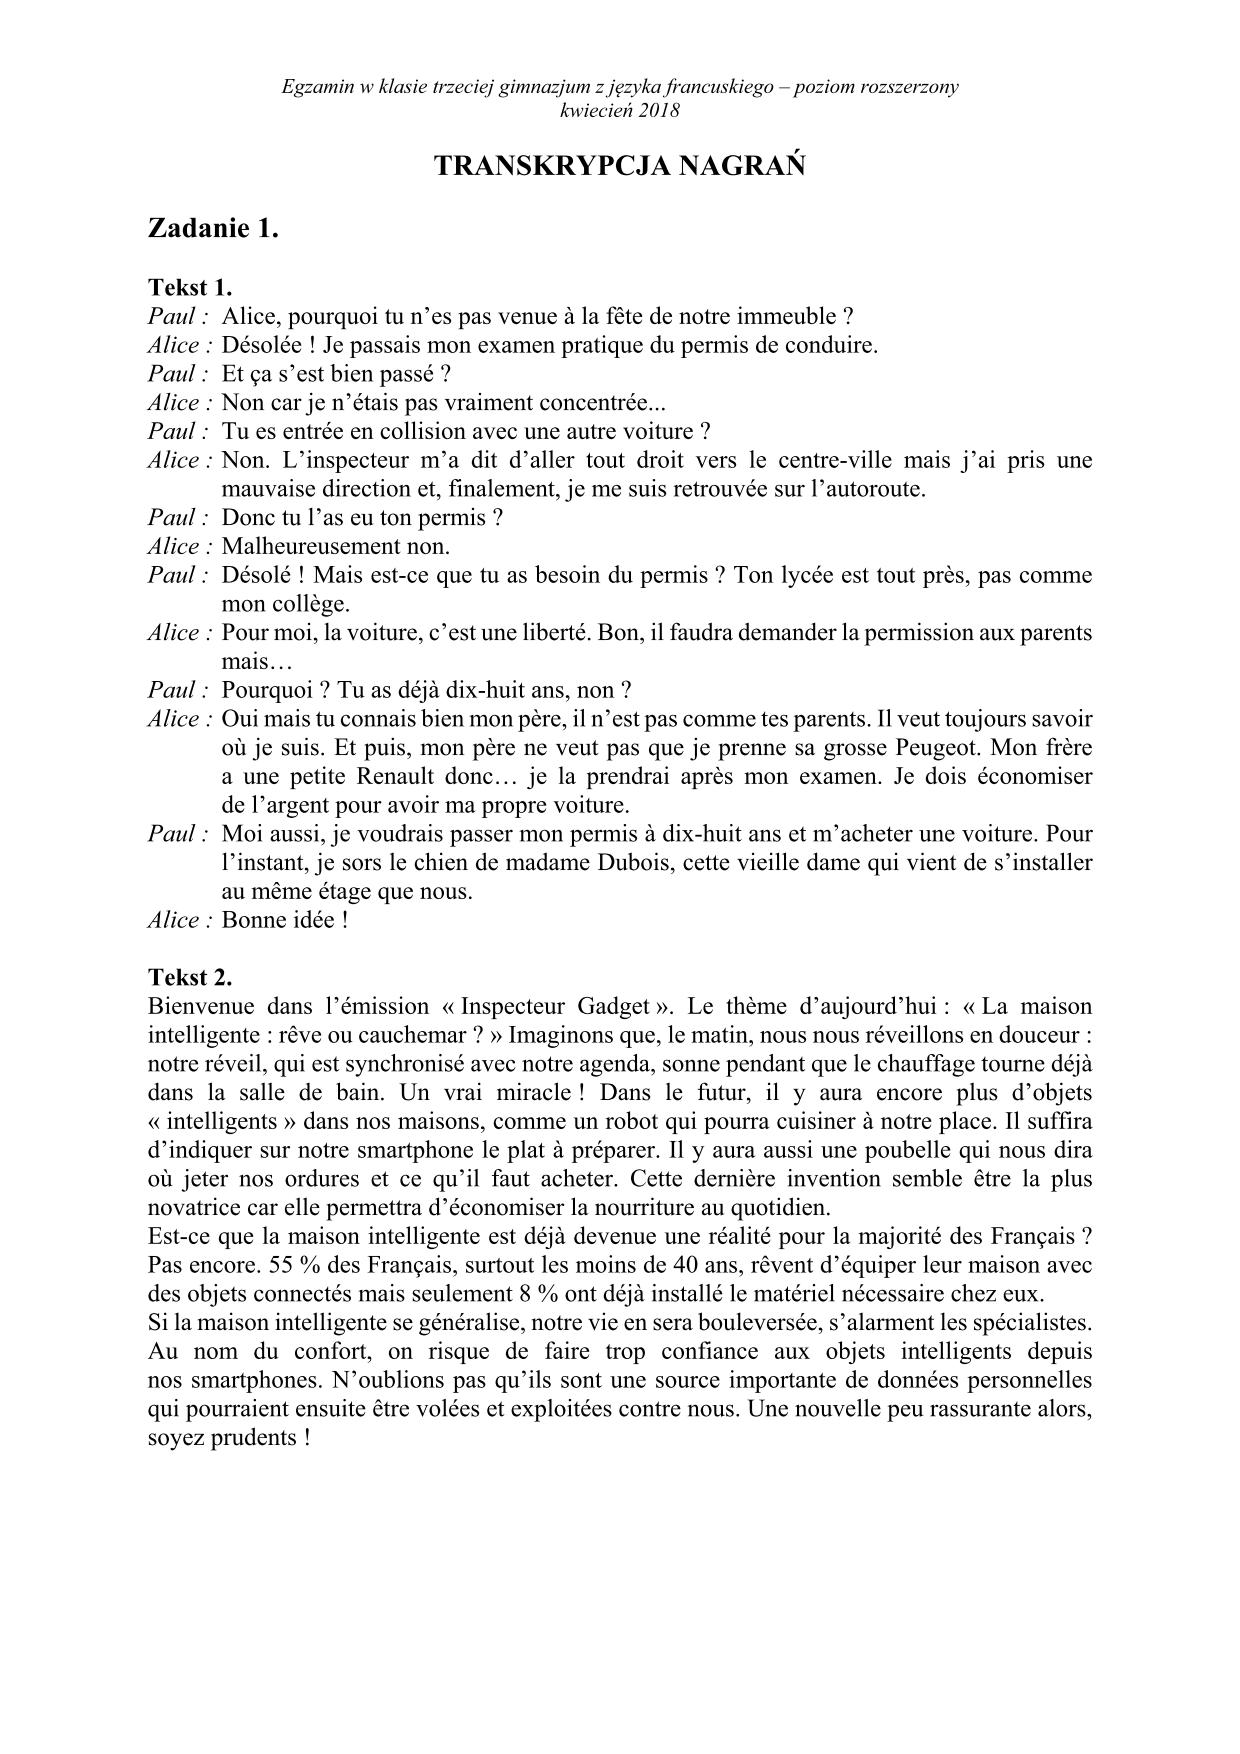 transkrypcja-francuski-poziom-rozszerzony-egzamin-gimnazjalny-2018 - 1